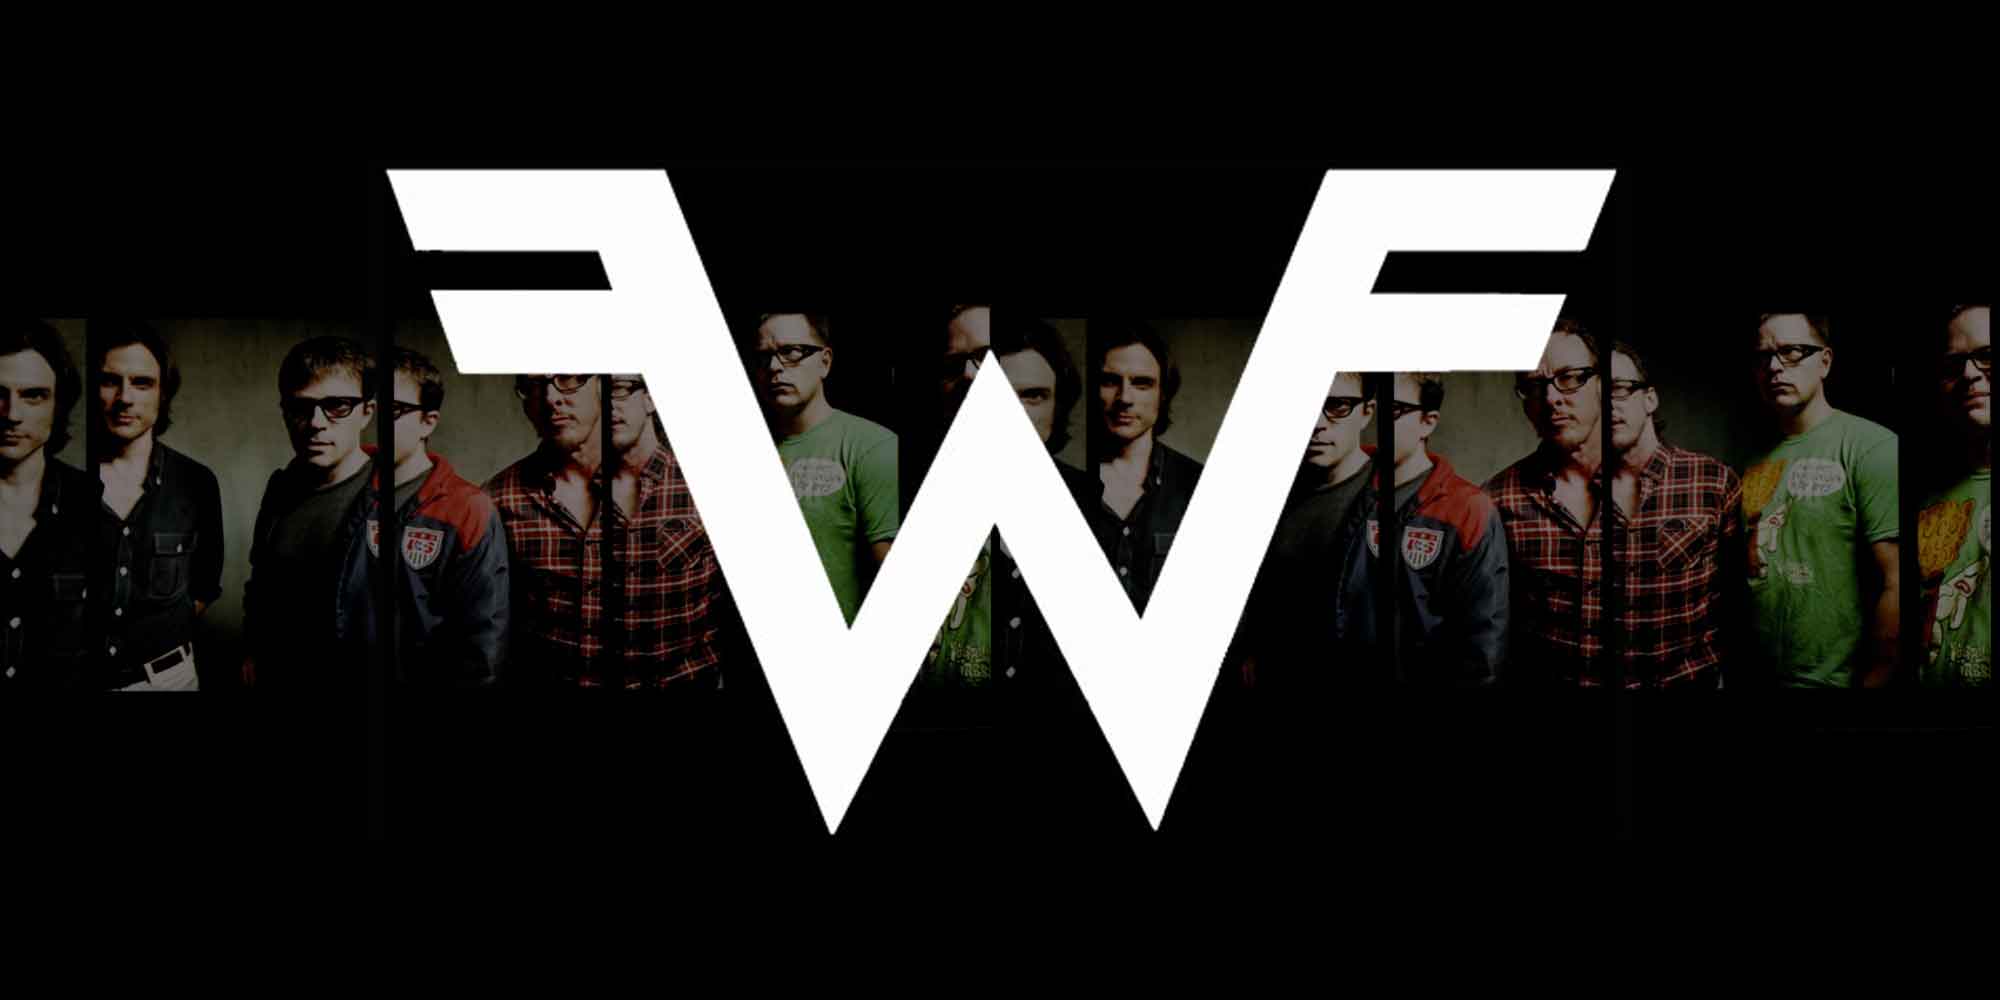 Weezer Drummer Patrick Wilson's EPIC Mid-Song Frisbee Catch